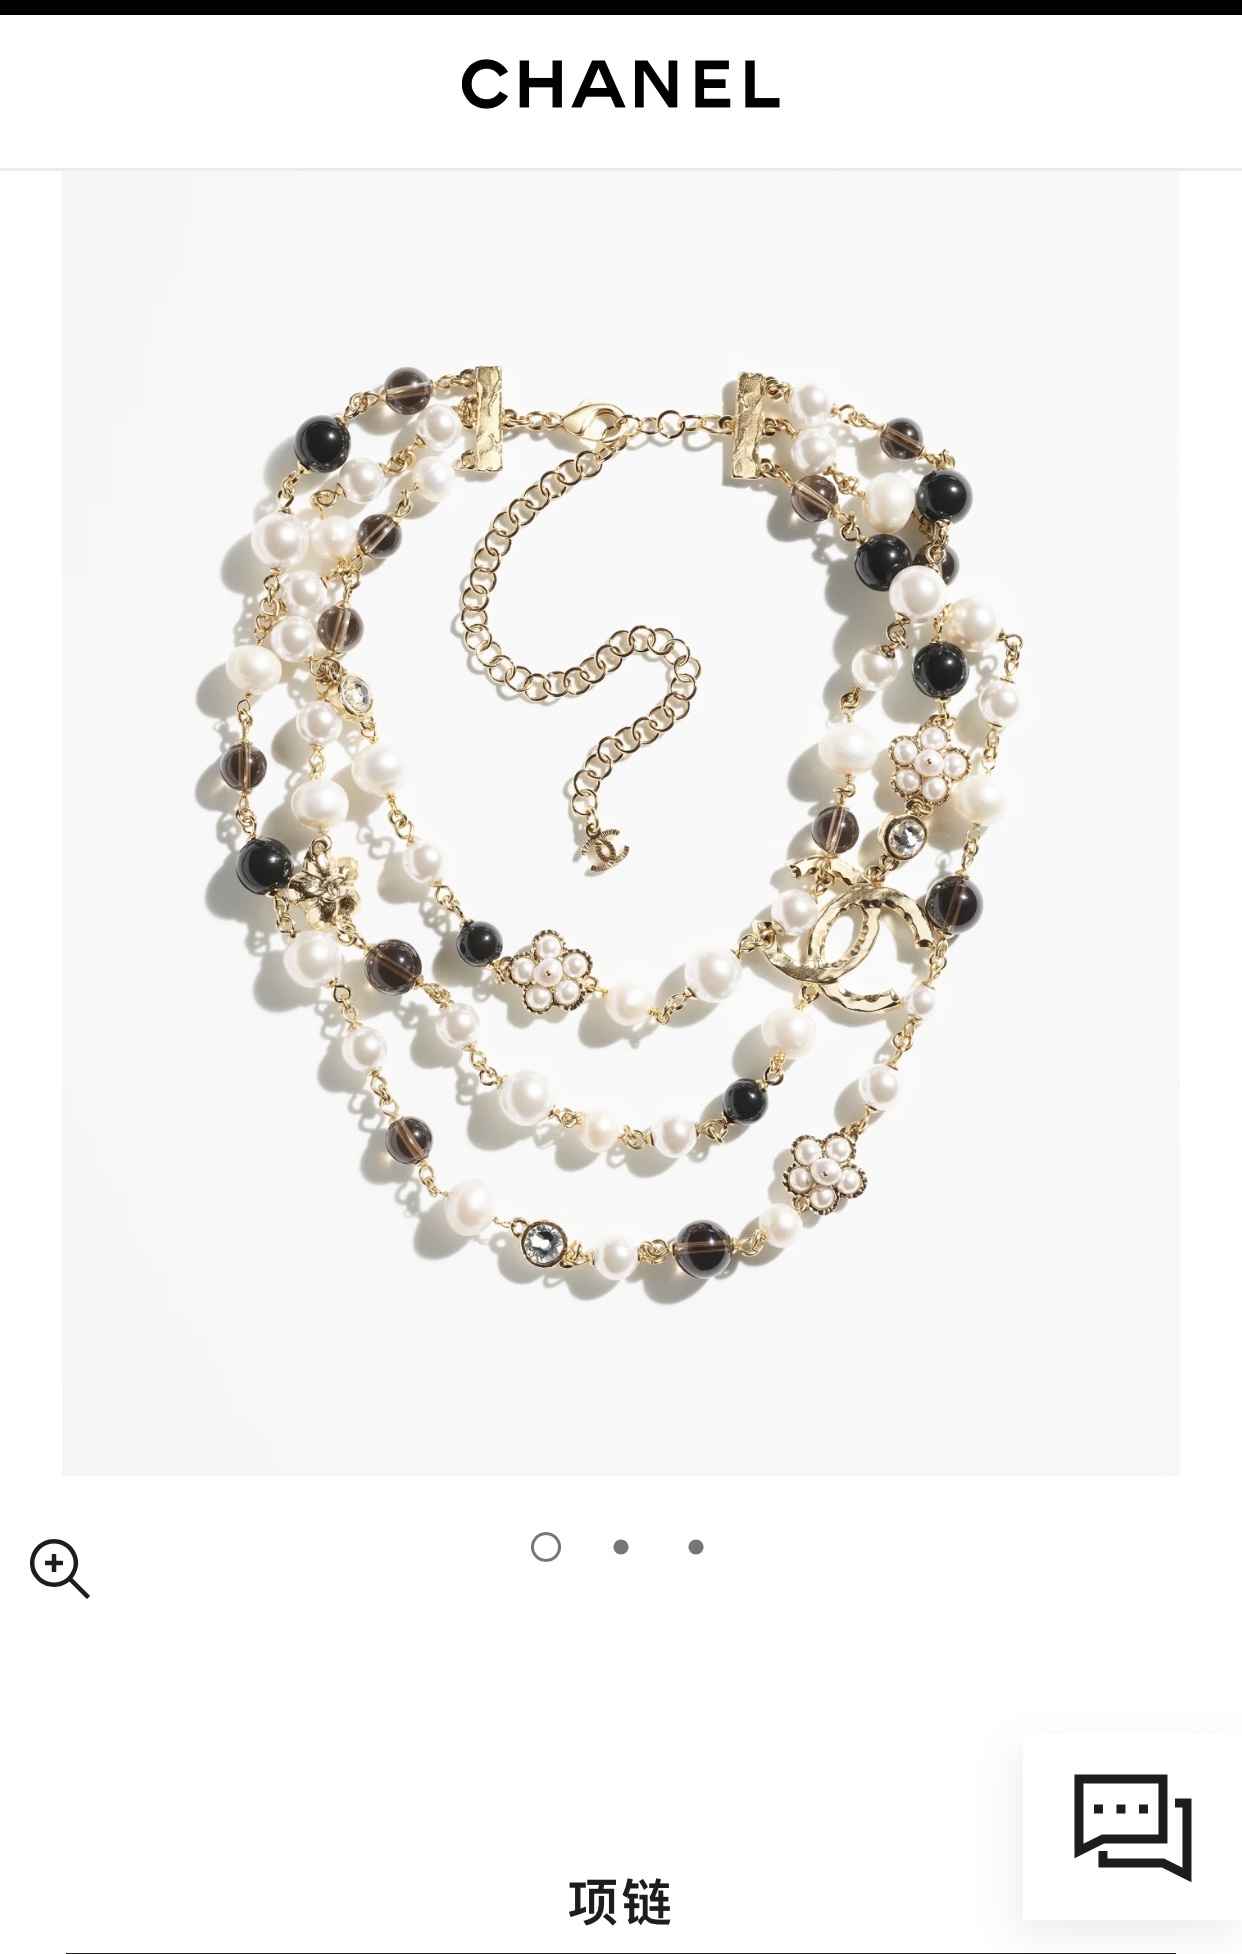 Chanel Jewelry Necklaces & Pendants Black White Fashion